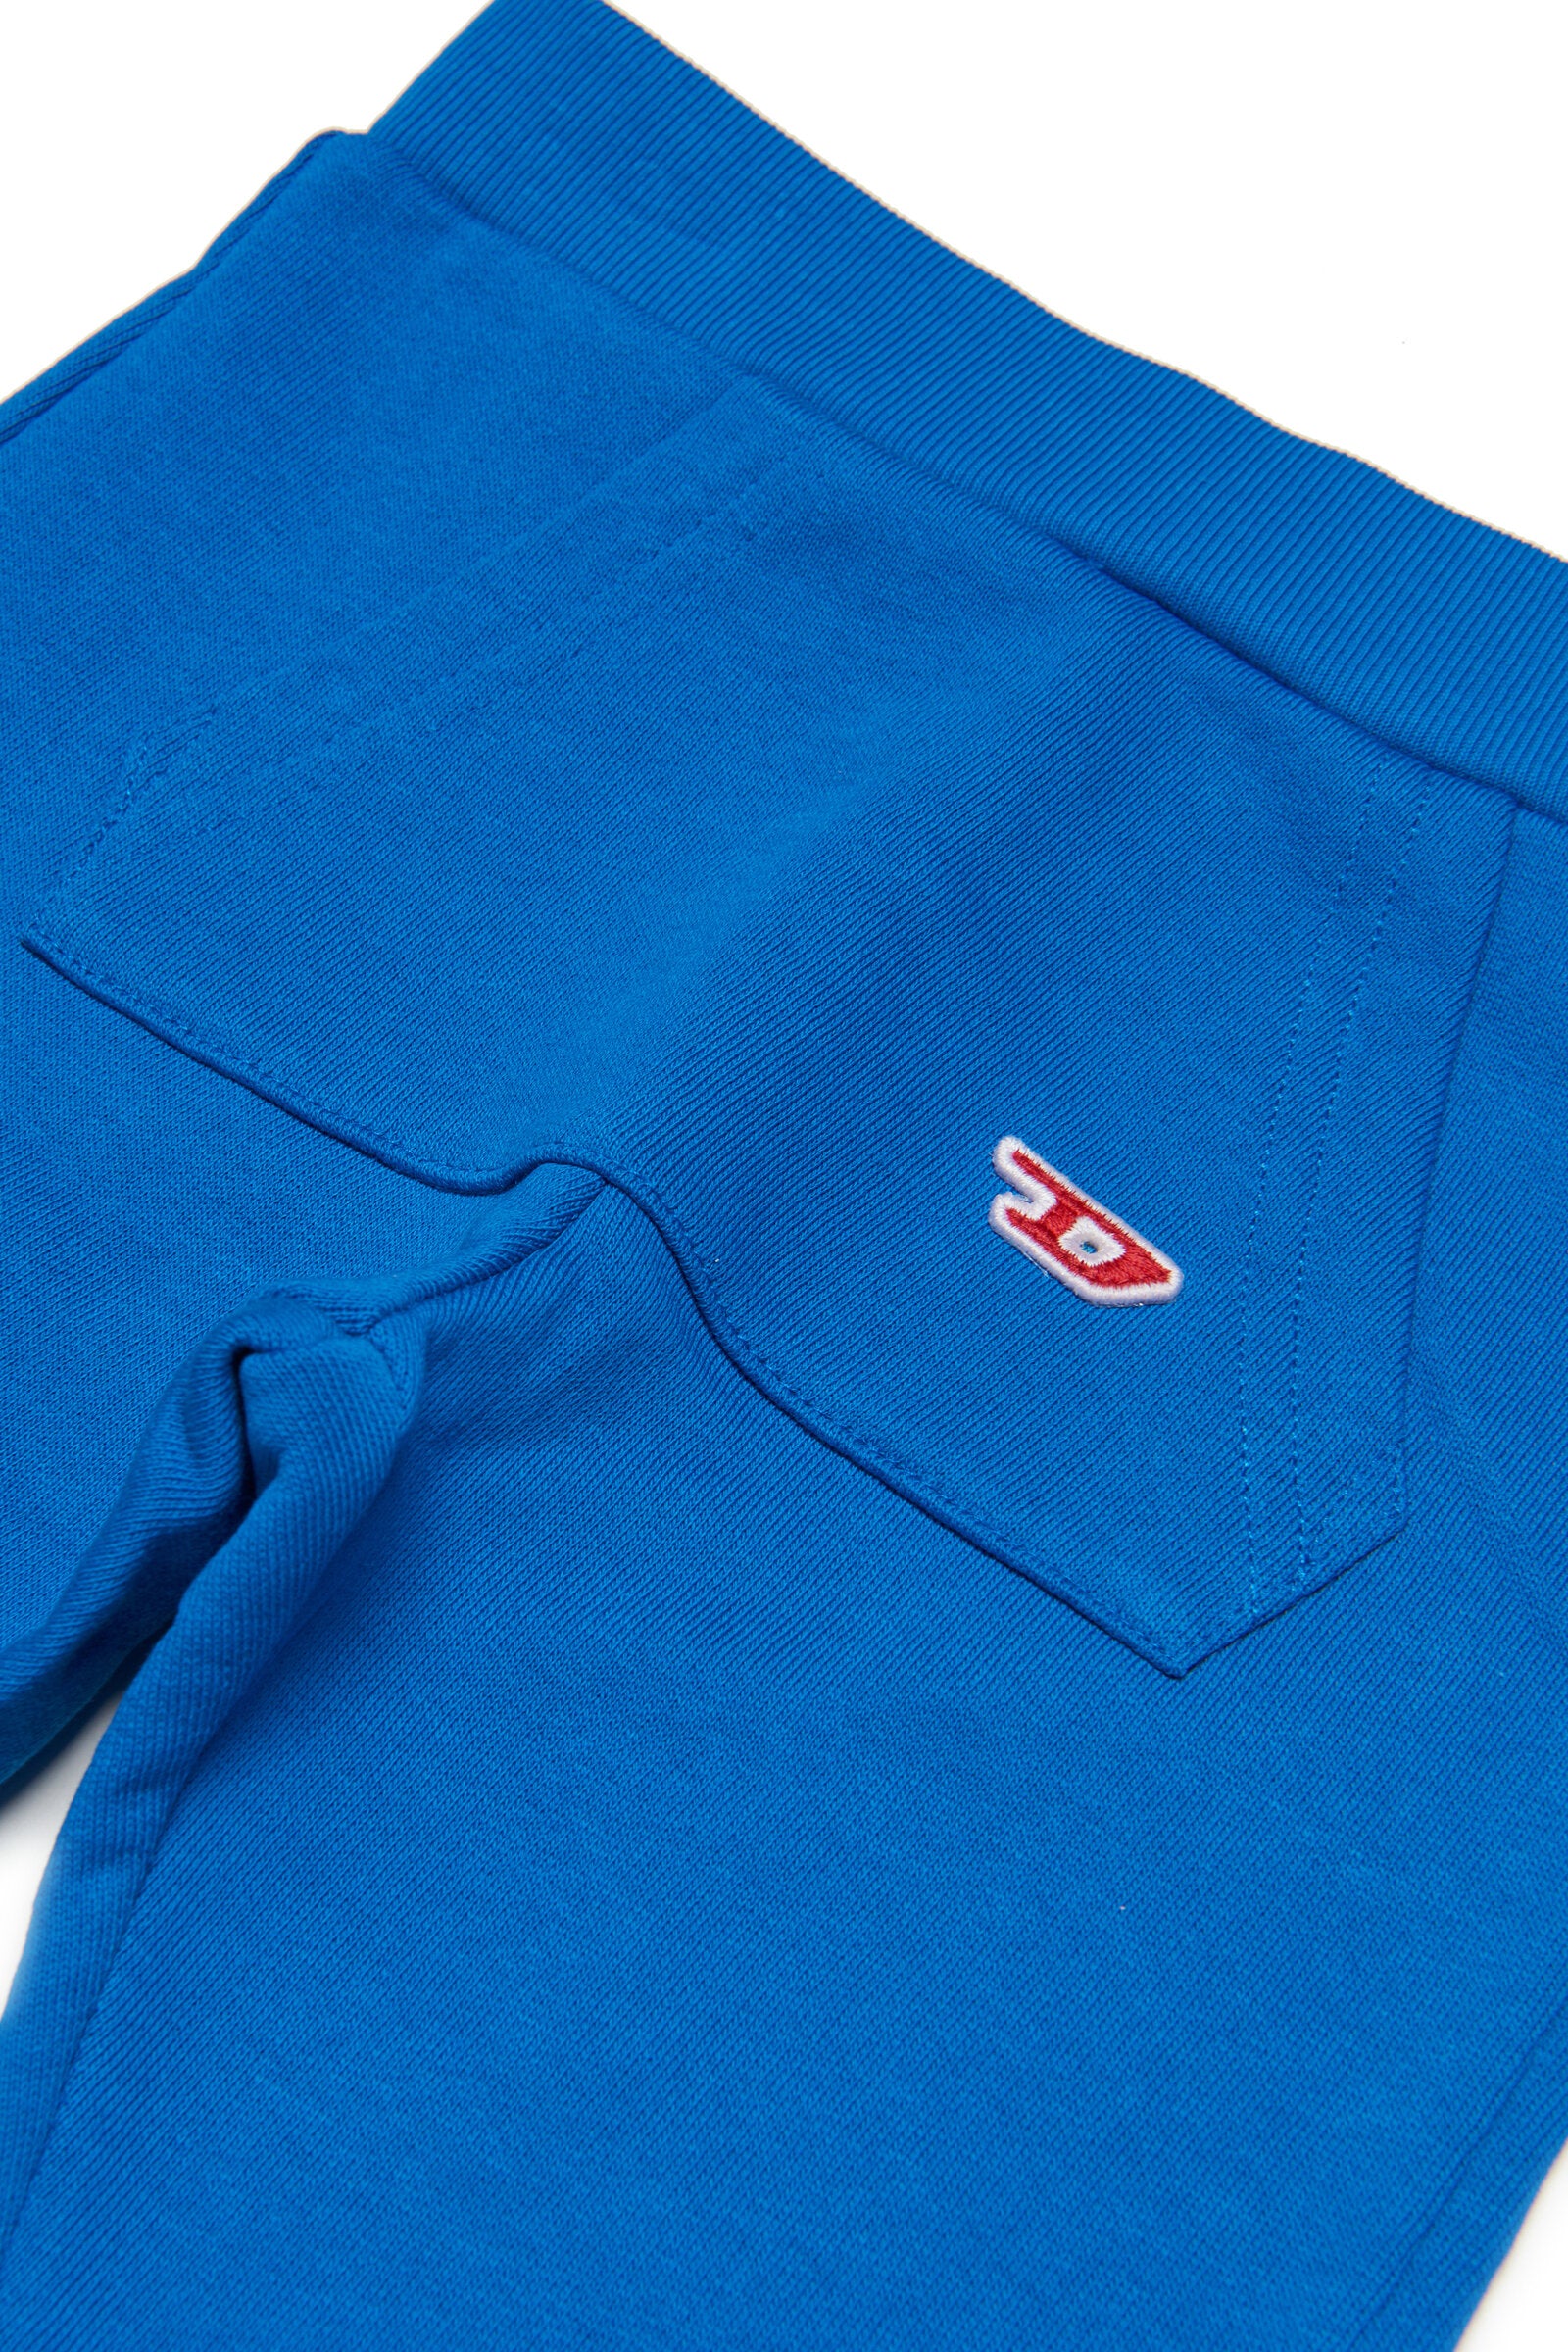 Blue sweatshirt pants with D logo